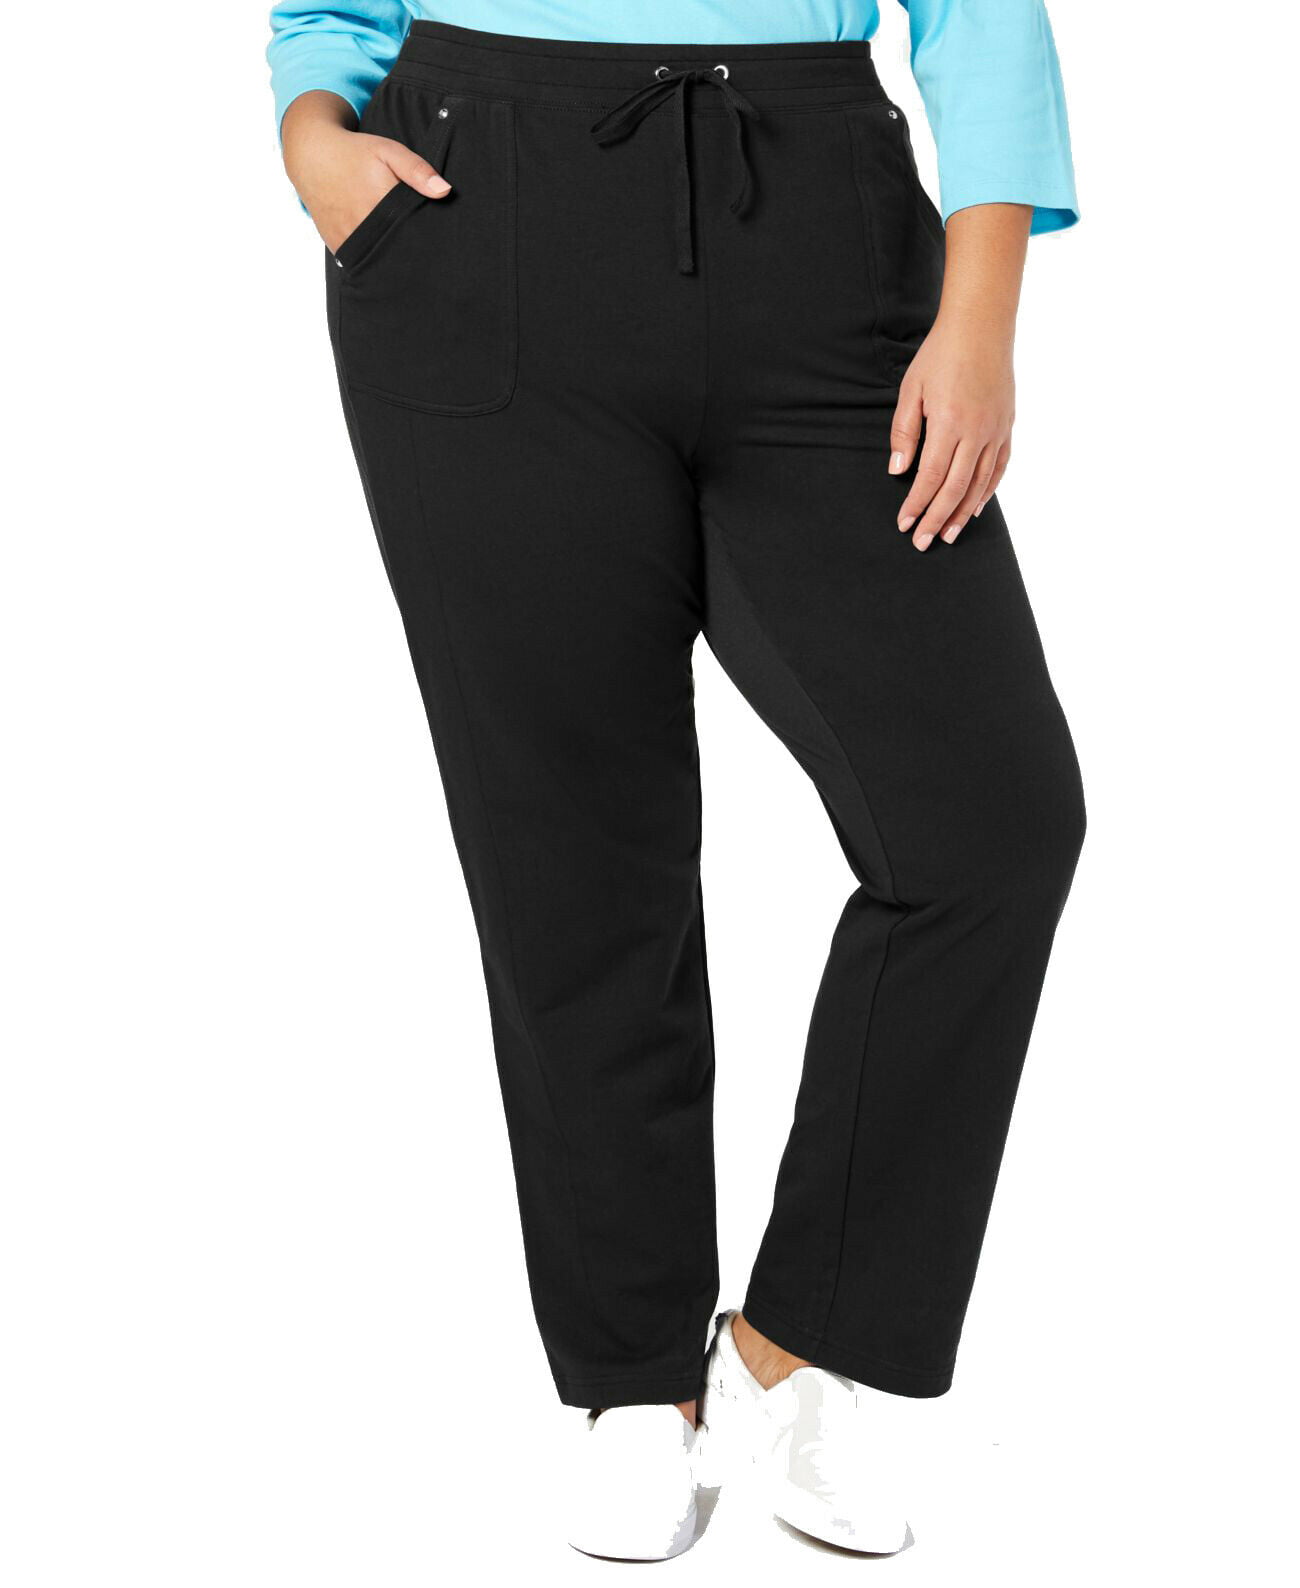 Womens Pants Black Plus Drawstring Pocket Stretch $54 1X - Walmart.com ...